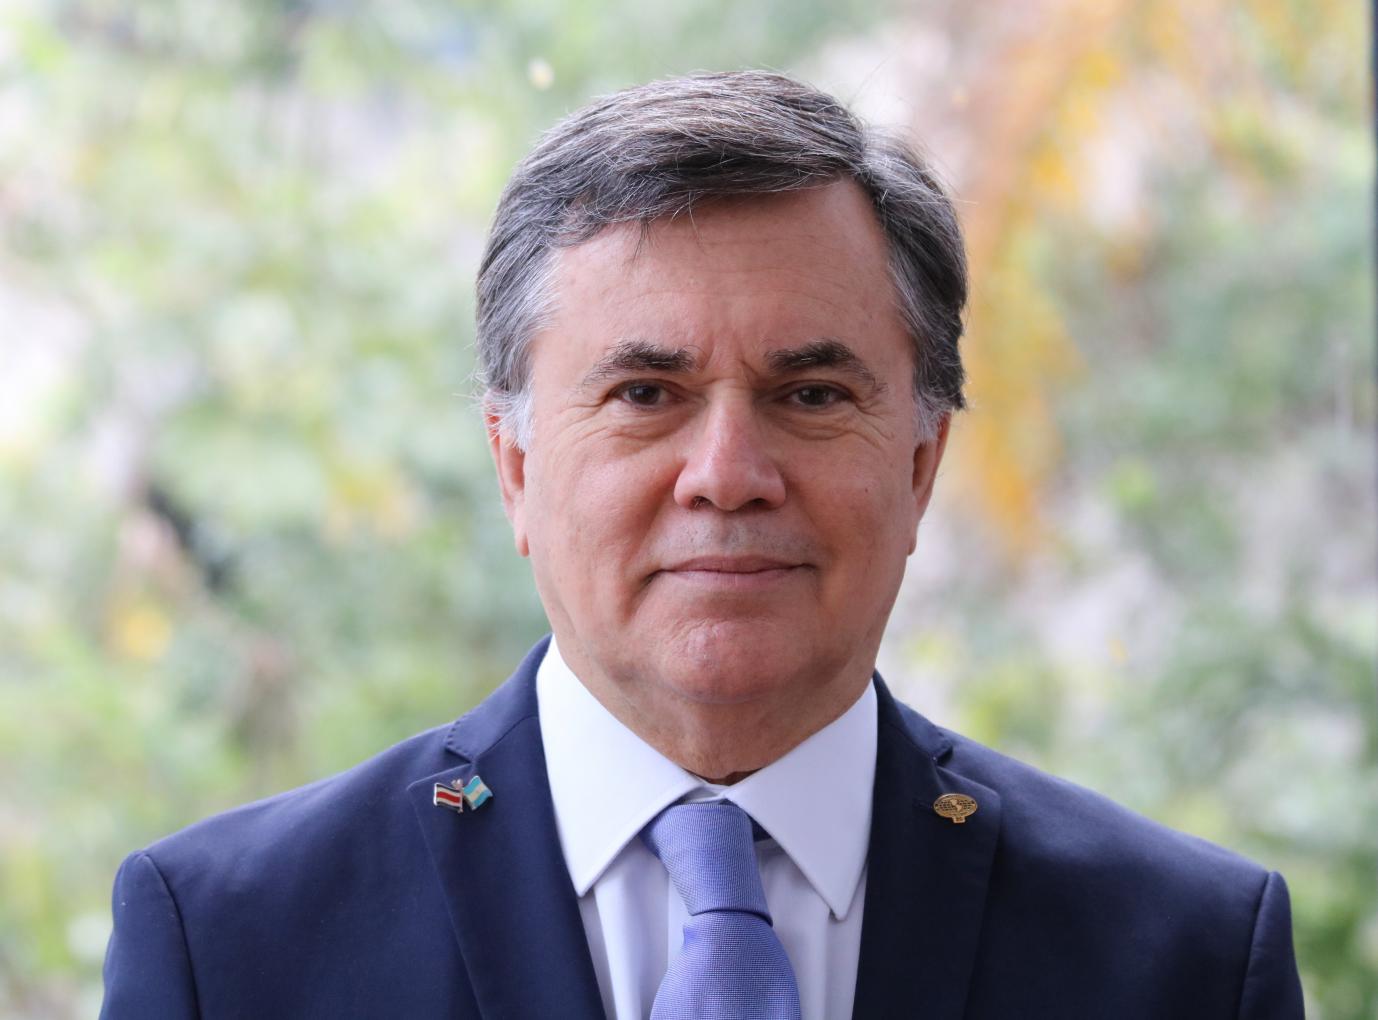 Manuel Otero